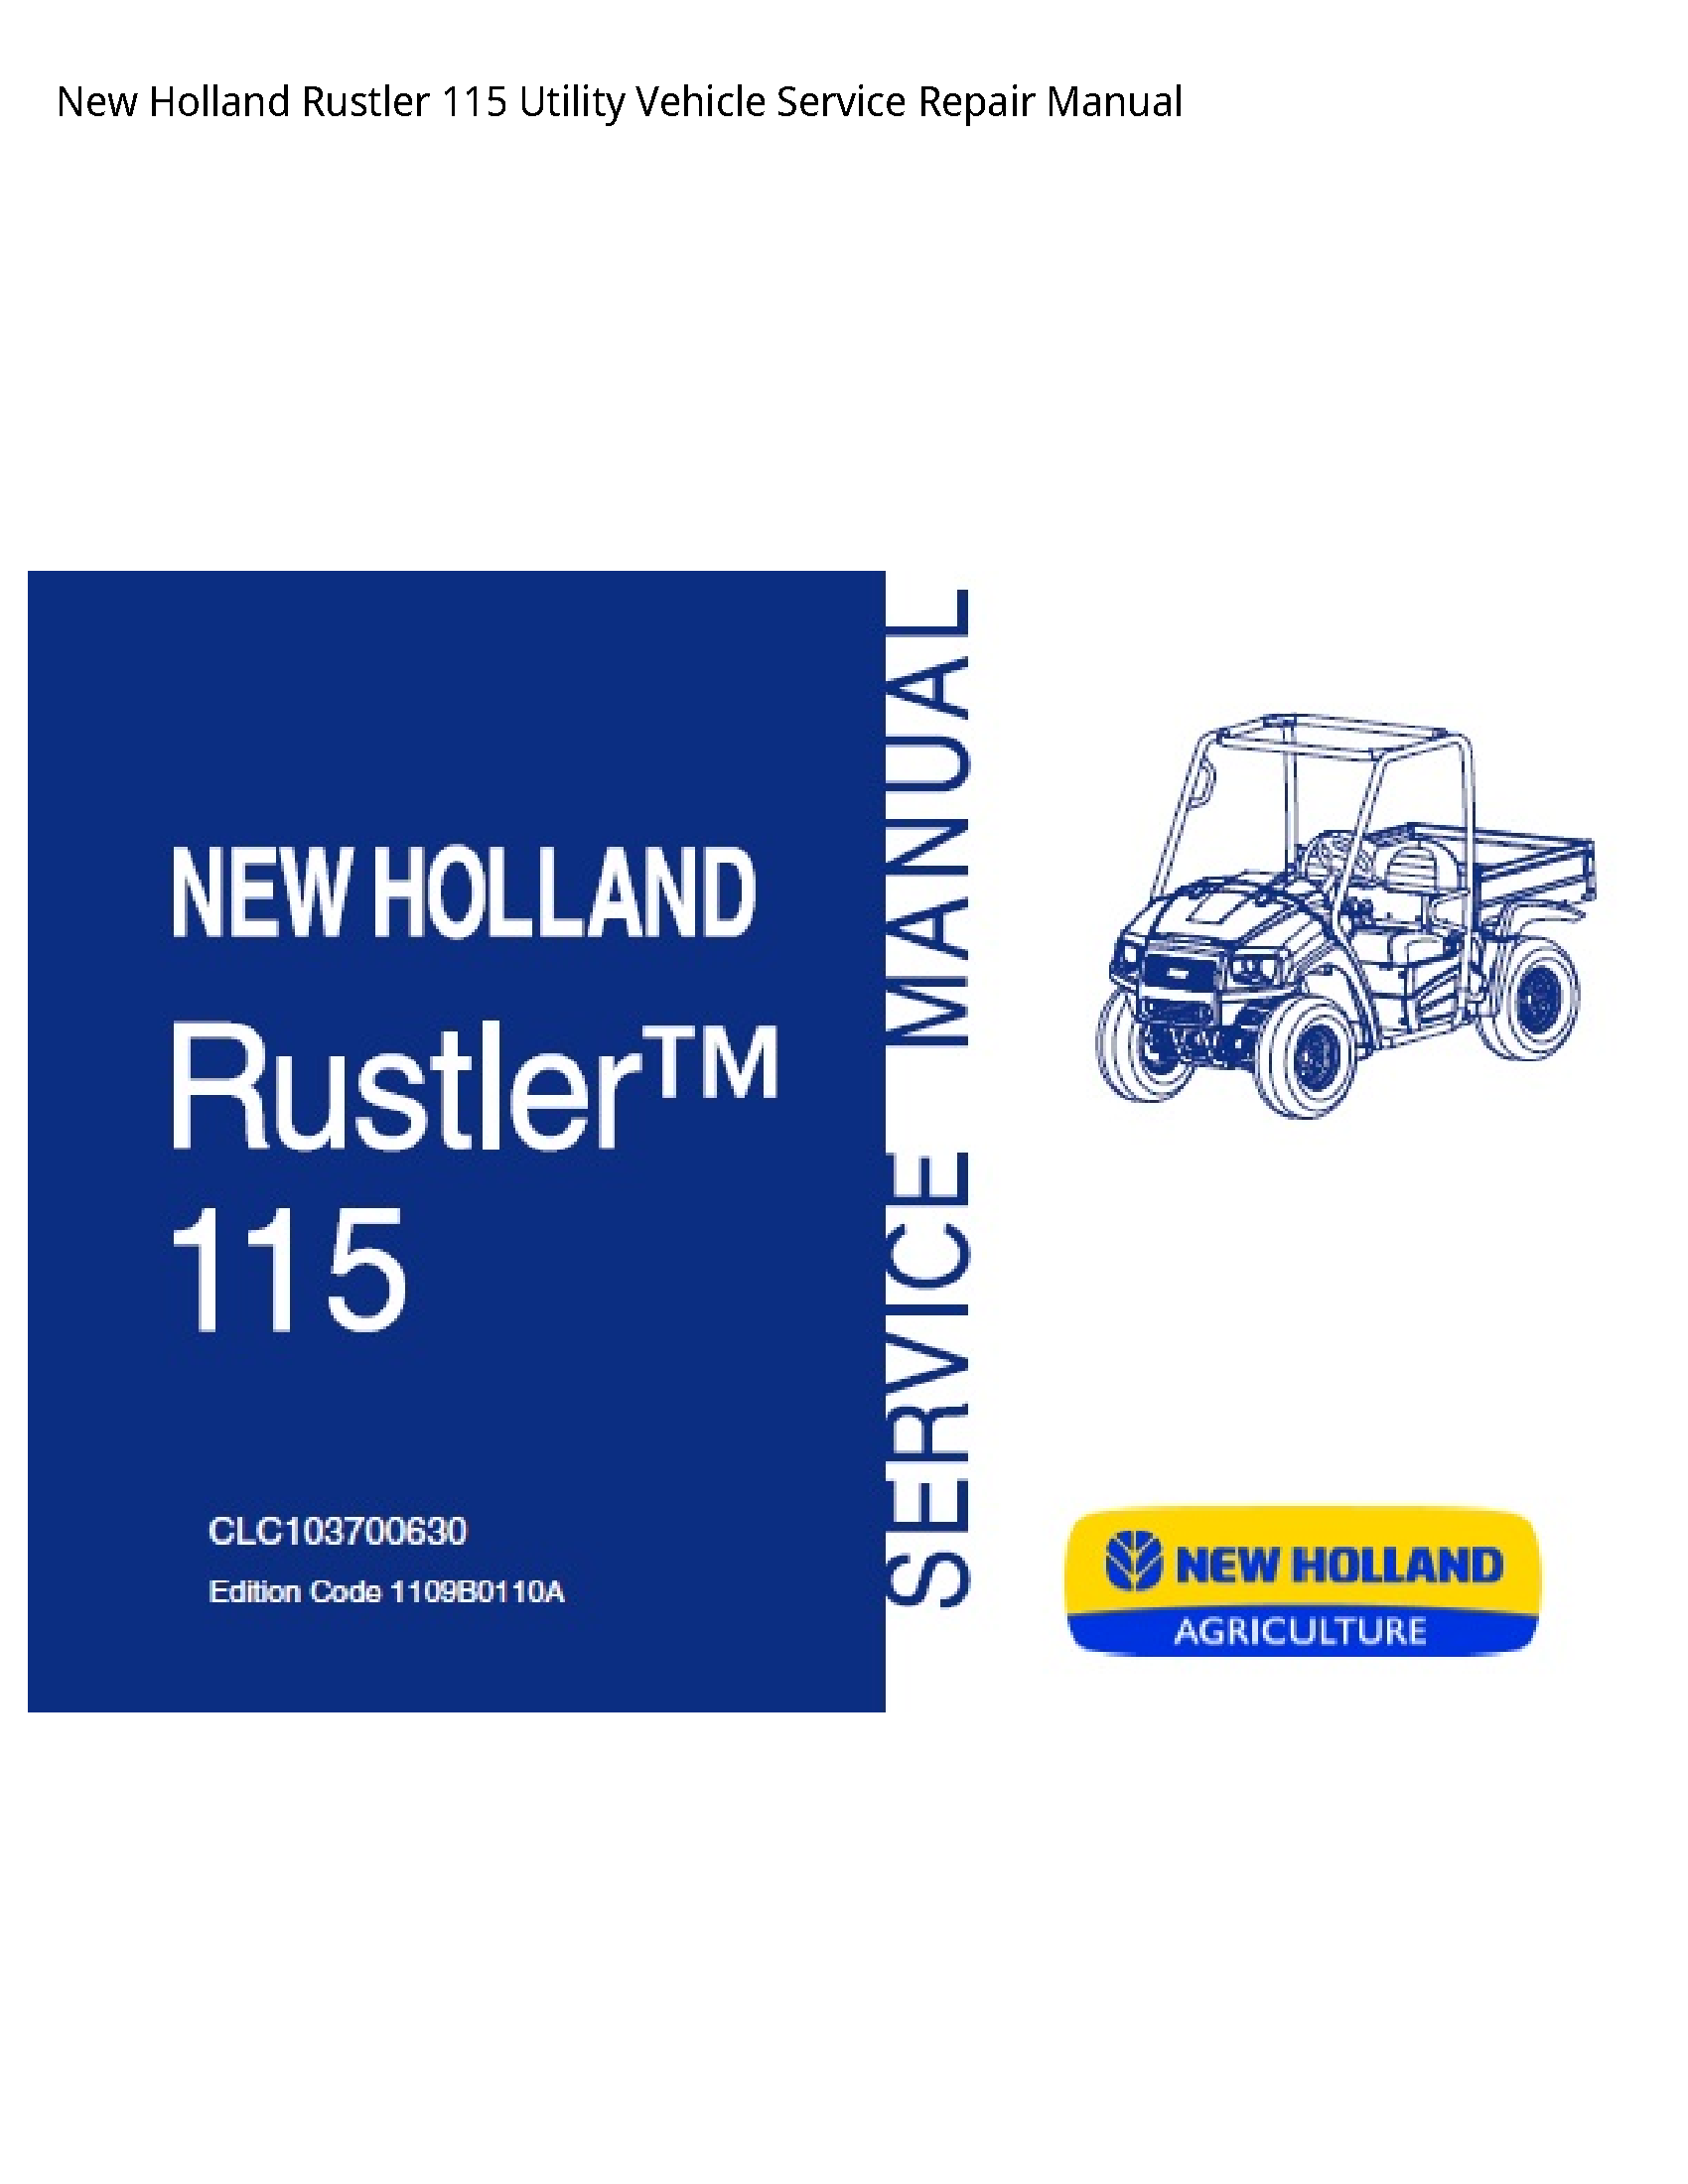 New Holland 115 Rustler Utility Vehicle manual